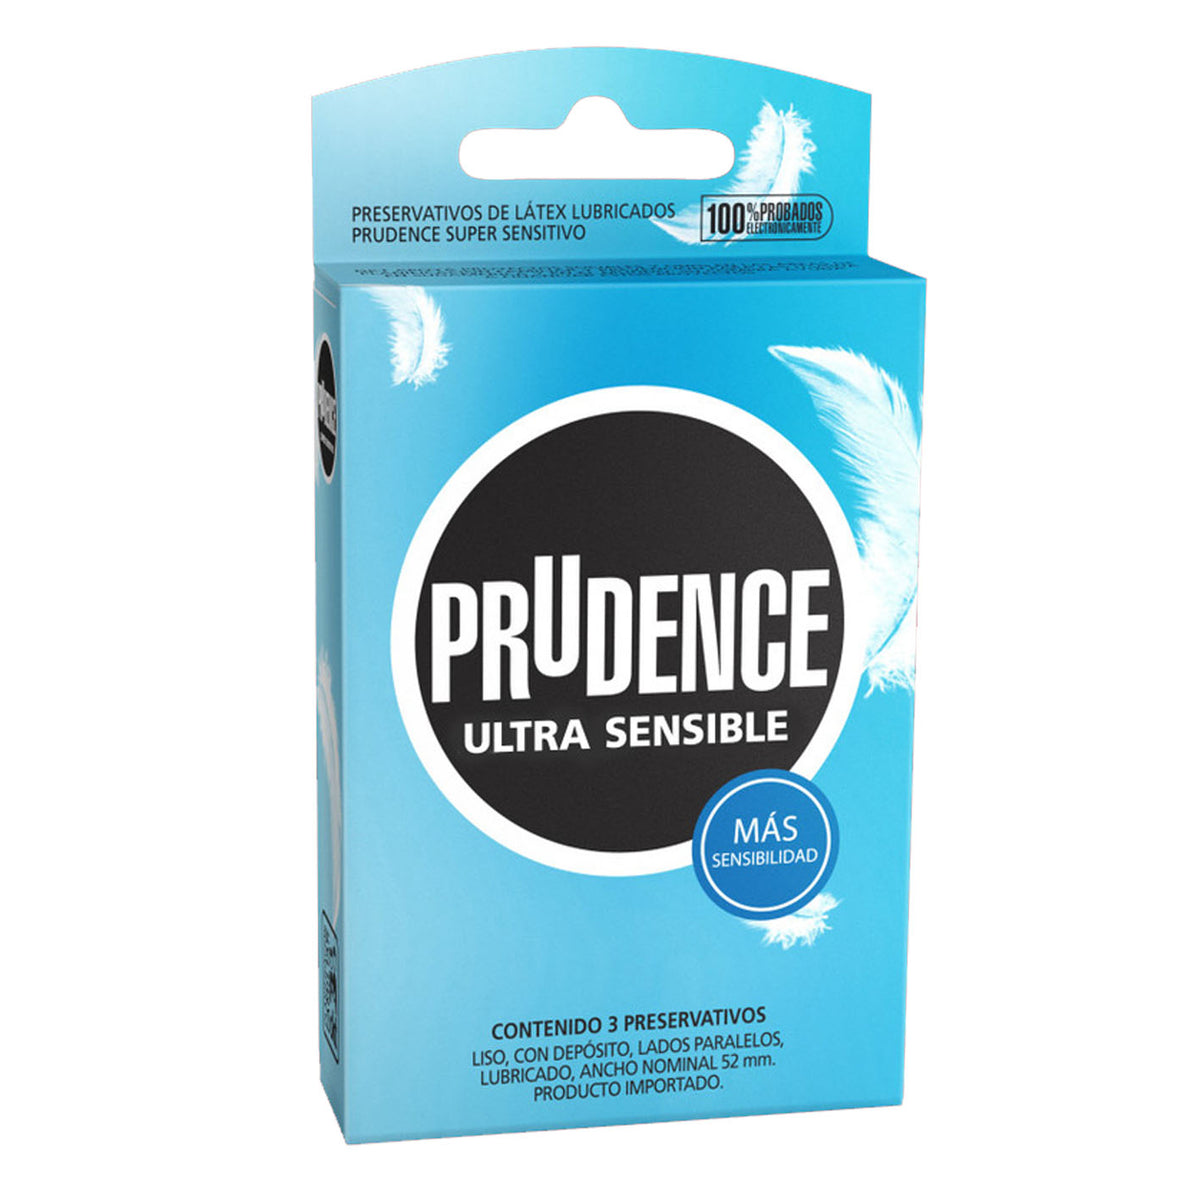 Prudence Preservativos Ultra Sensible